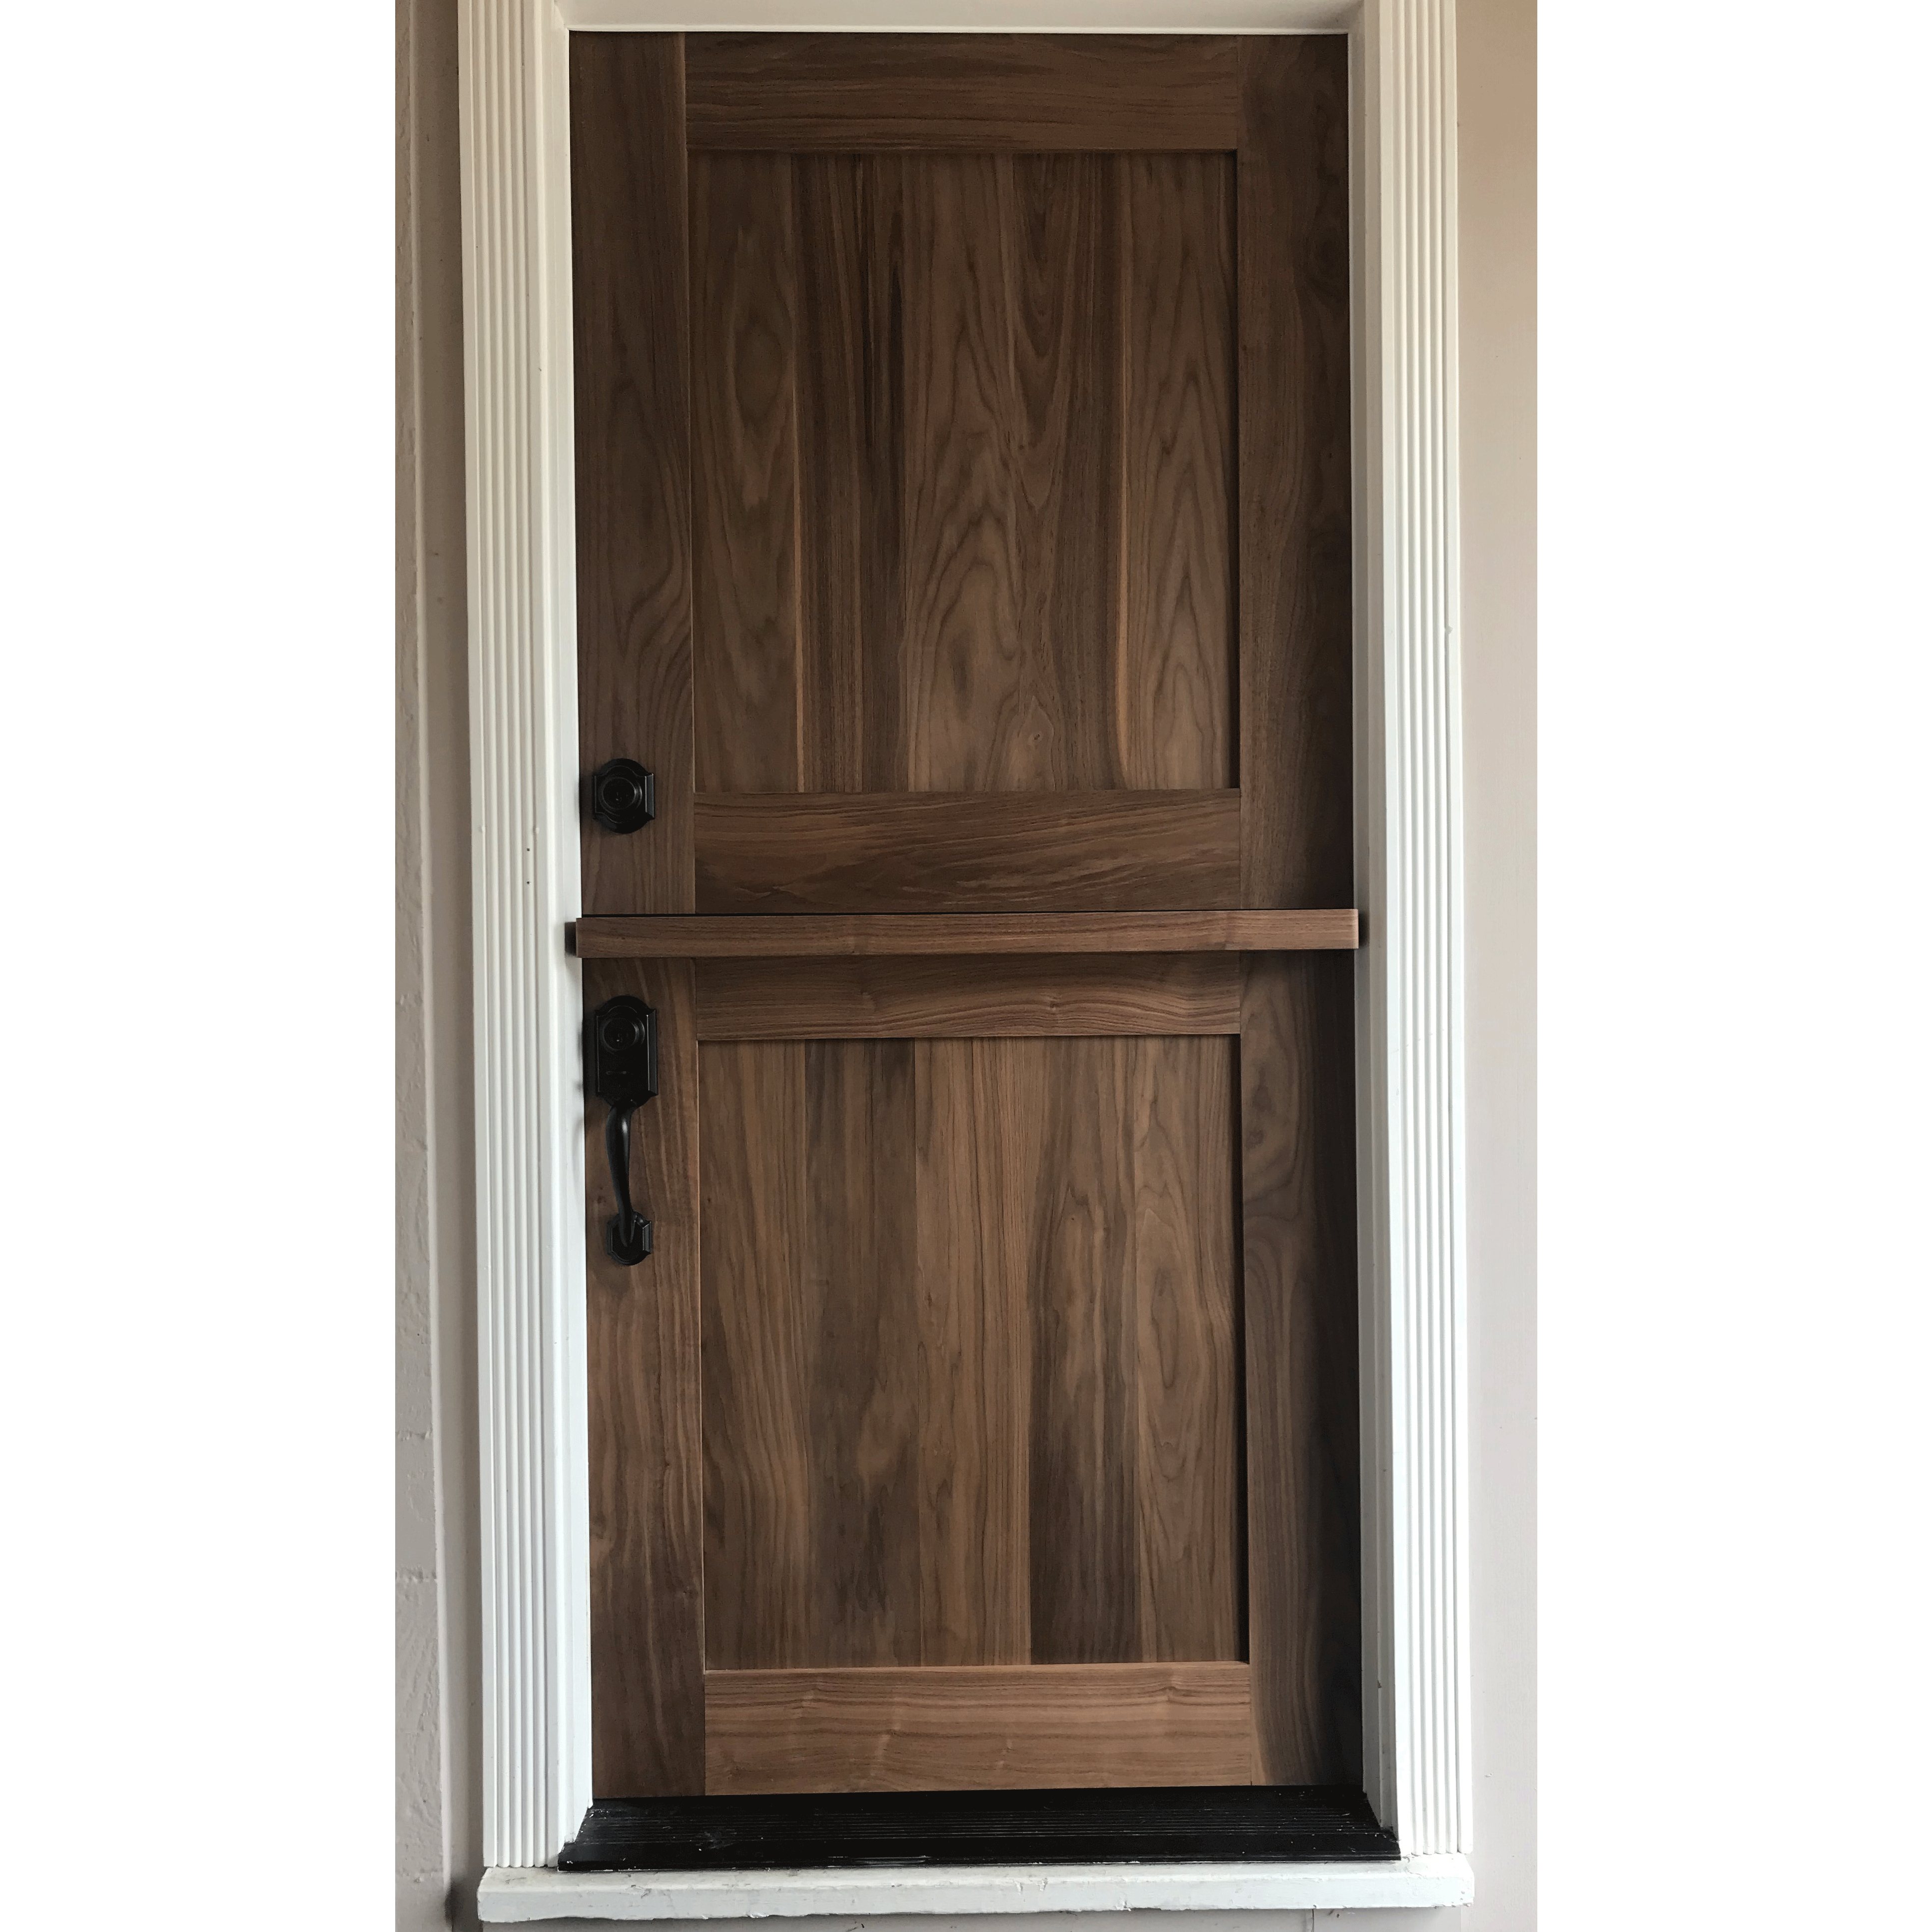 How to Make a DIY Interior Dutch Door